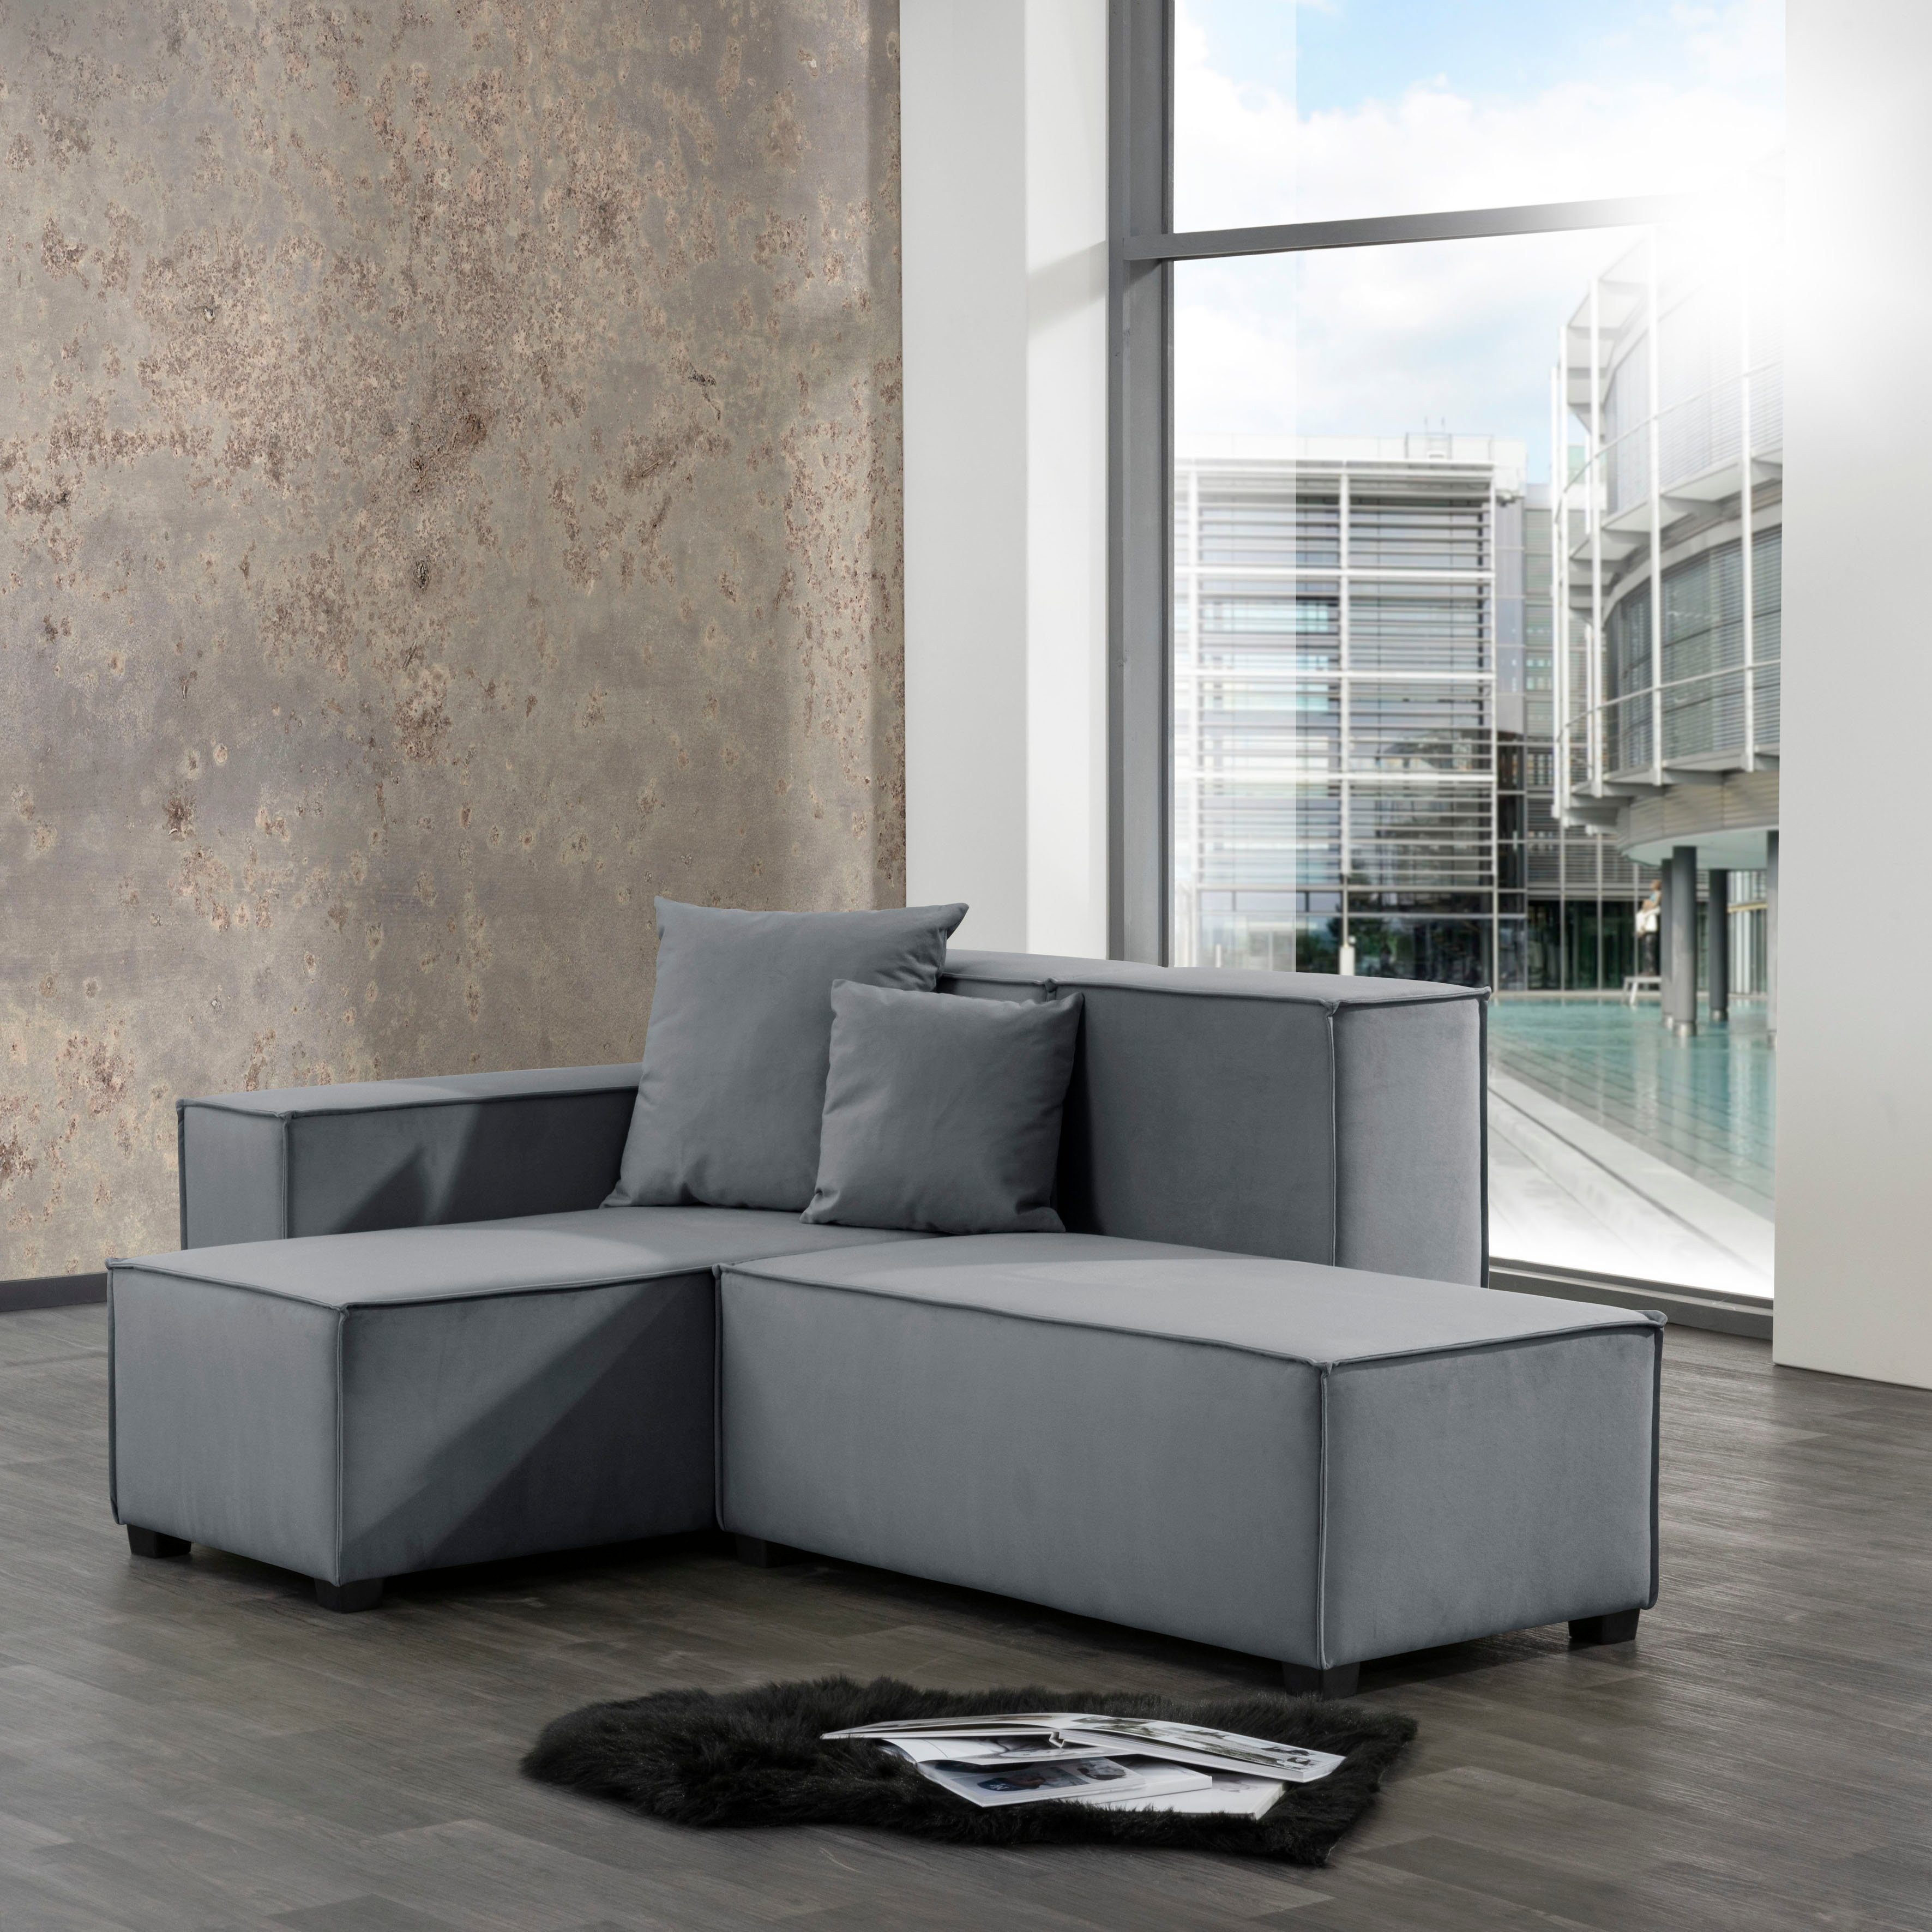 Max Winzer® Wohnlandschaft MOVE, Set, Sofa-Set 07 aus 5 Sitz-Elementen, inklusive 2 Zierkissen, kombinierbar